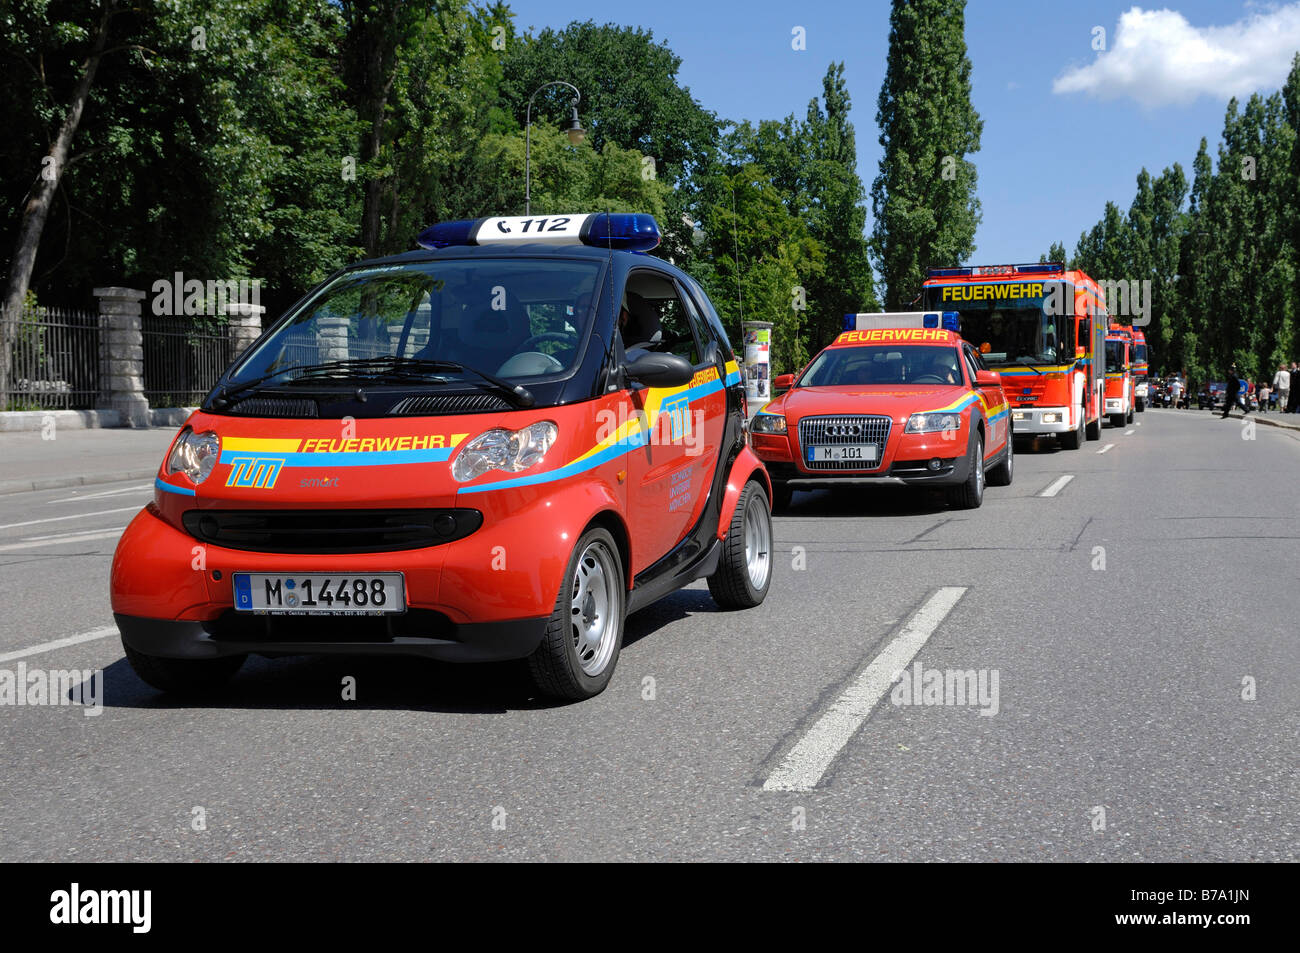 Fire brigade cars, Leopoldstrasse Street, Munich, Bavaria, Germany, Europe Stock Photo